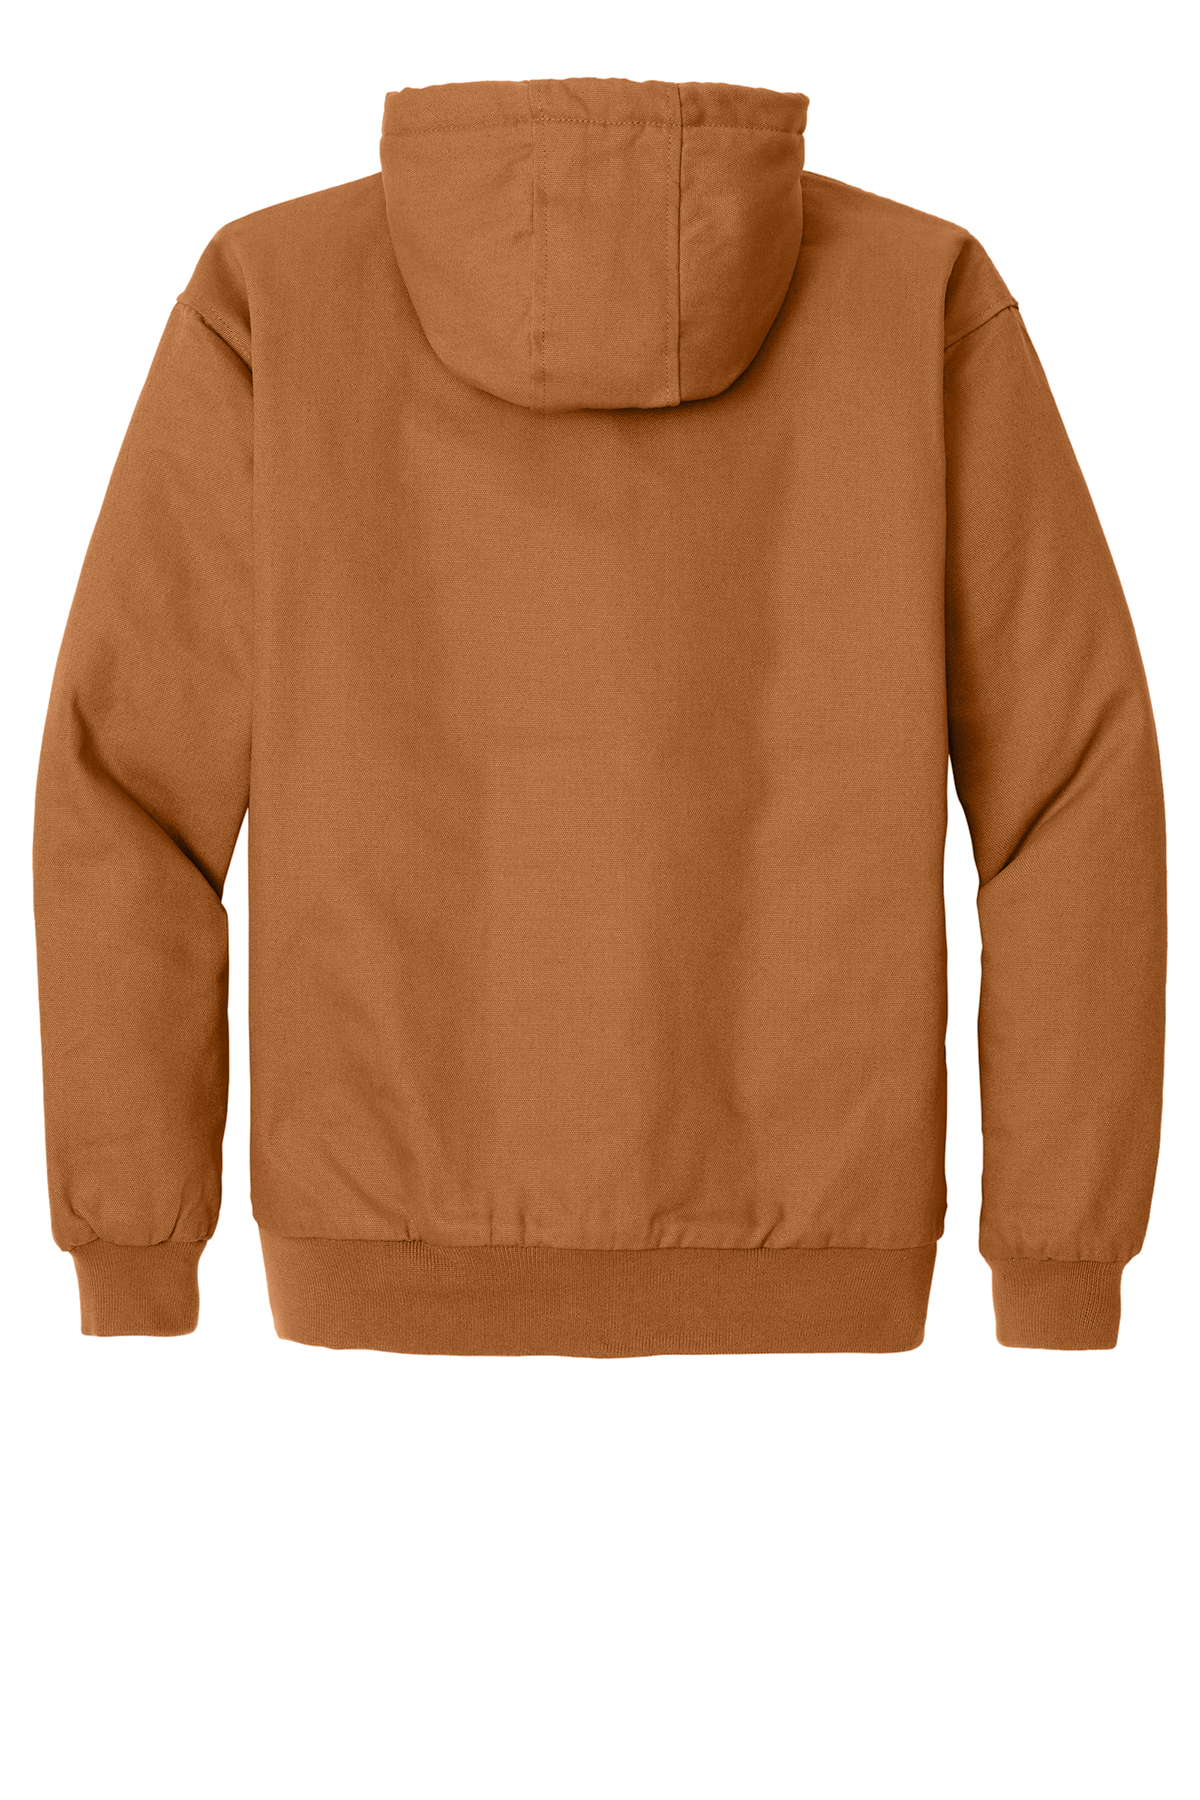 CornerStone Tall Duck Cloth Hooded Work Jacket | Product | SanMar